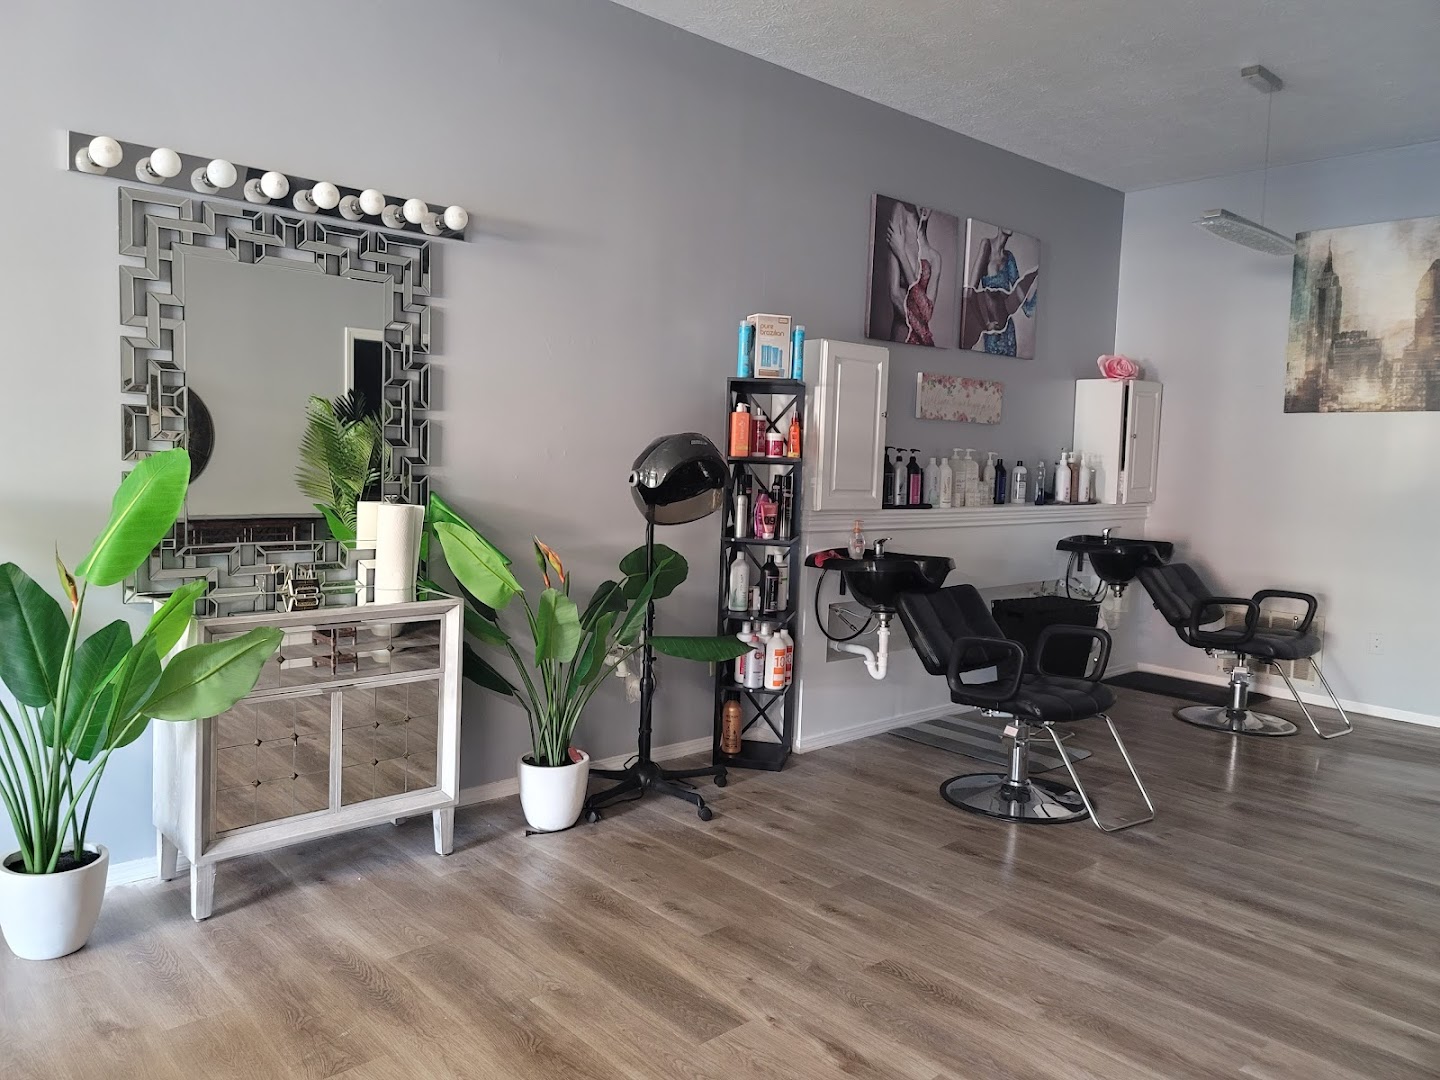 Pandora Tqm Unisex Beauty salon